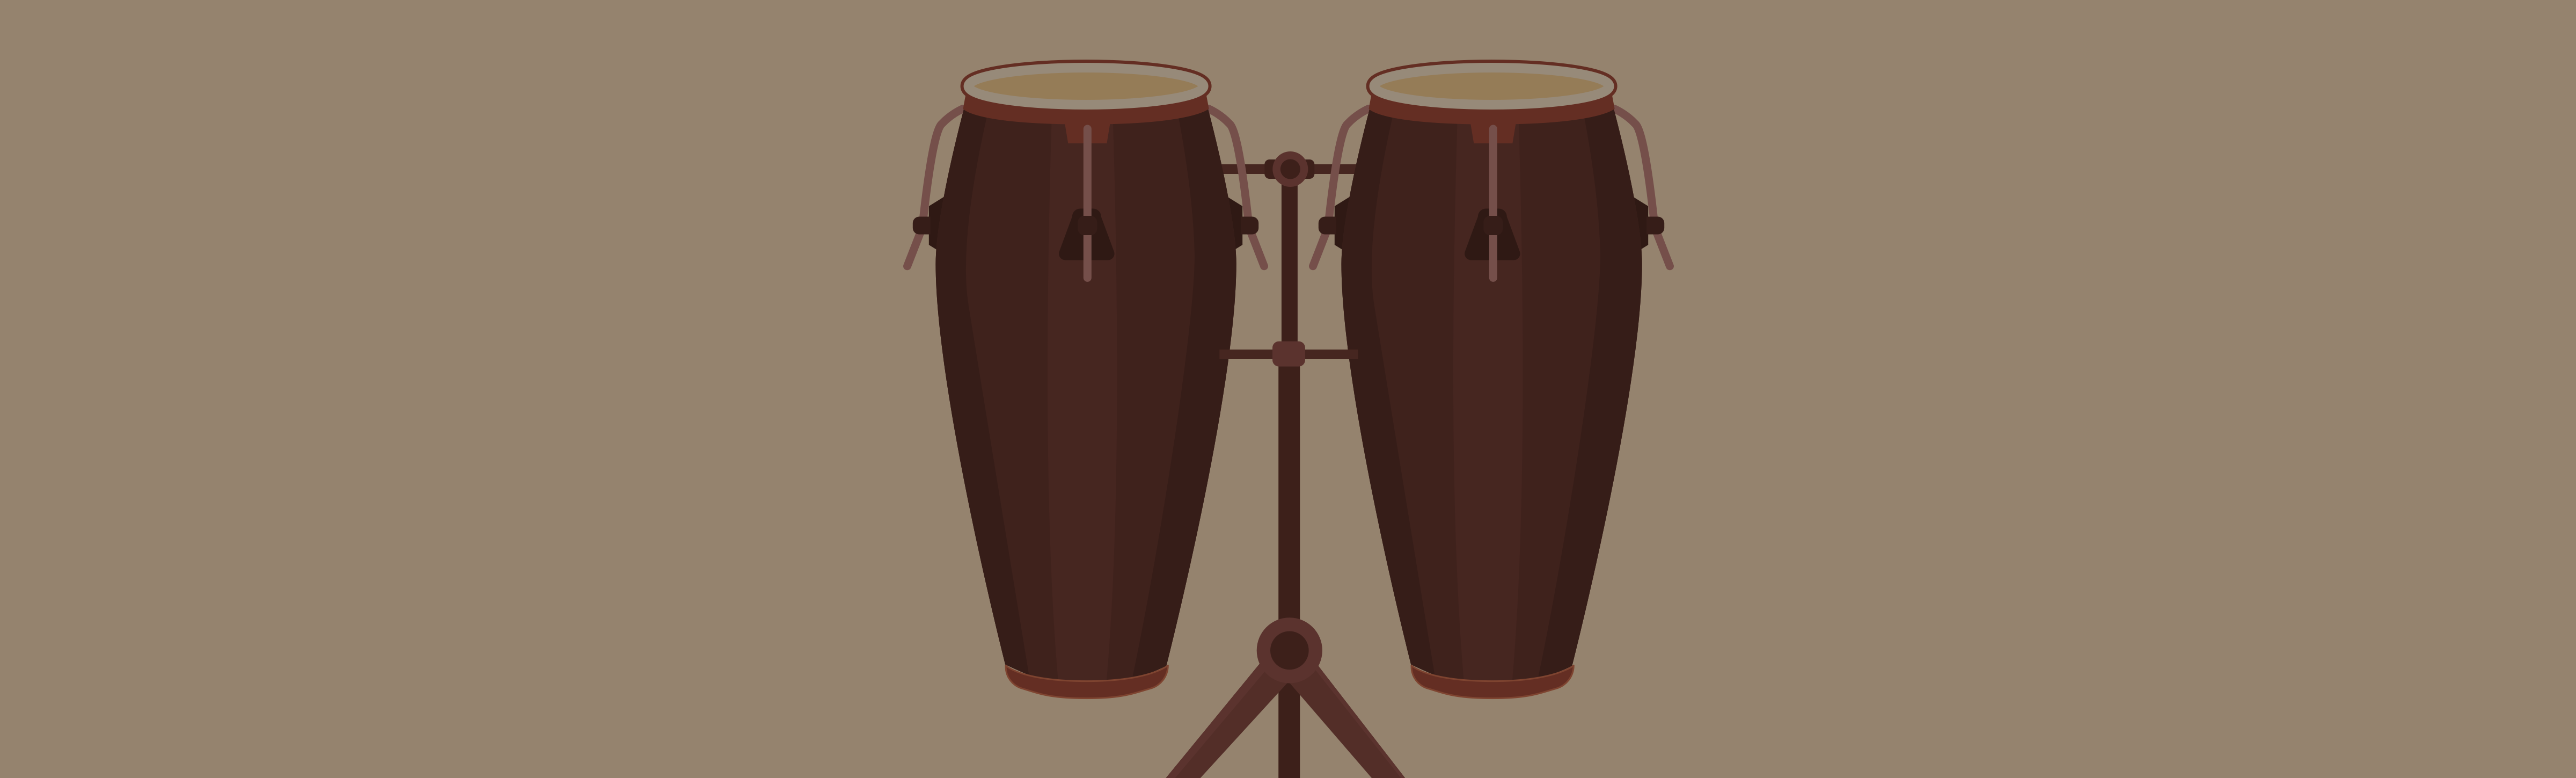 Instruments Drums